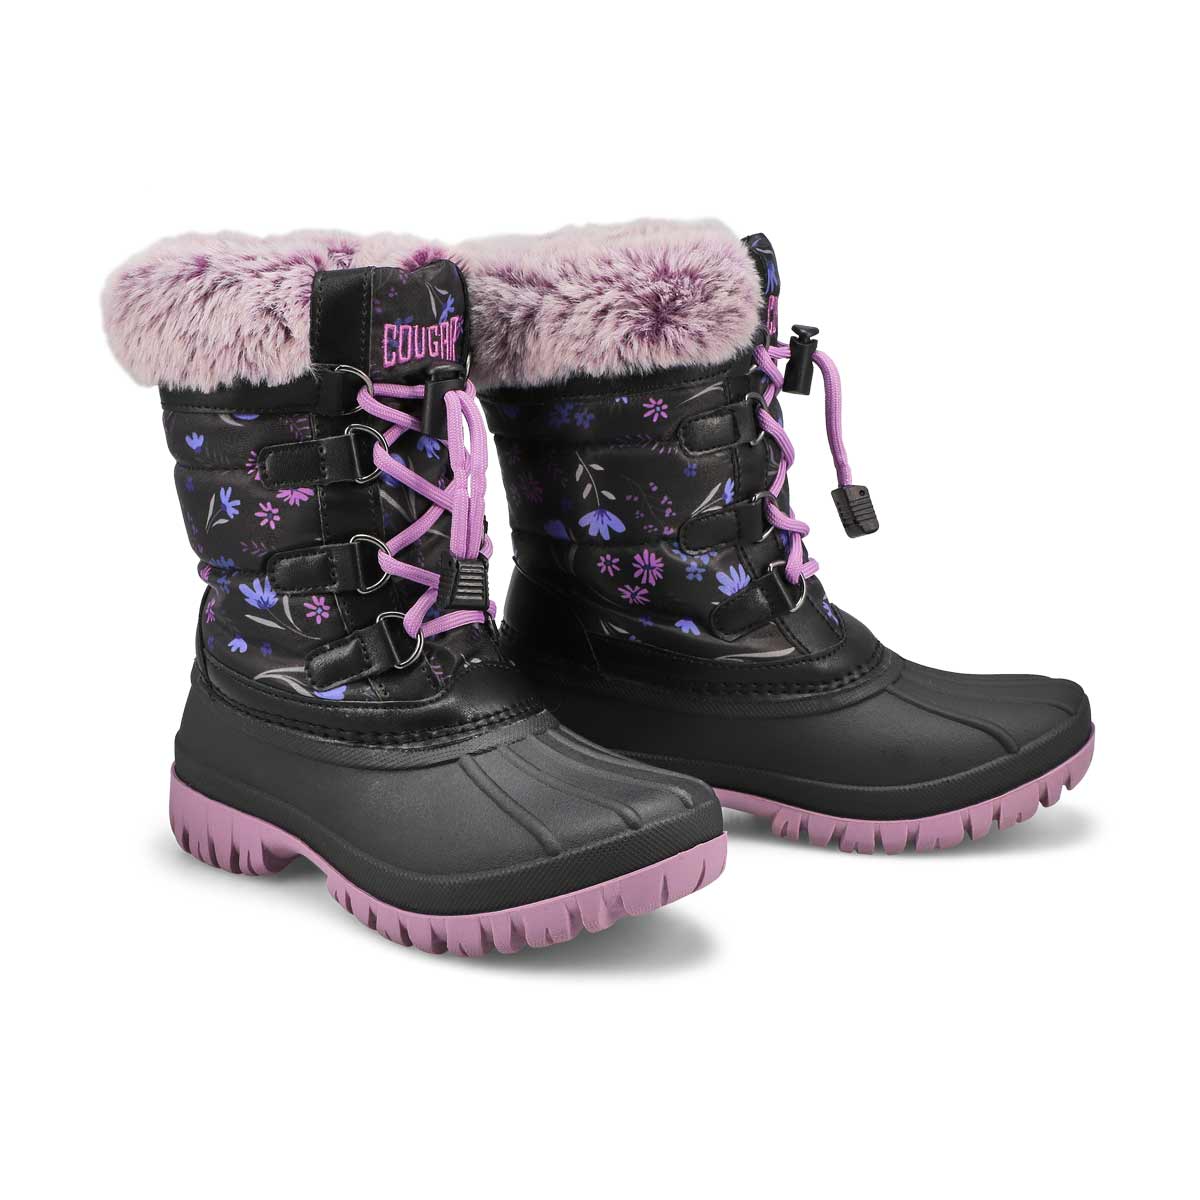 Girls' Charm Pull On Waterproof Winter Boot - Black